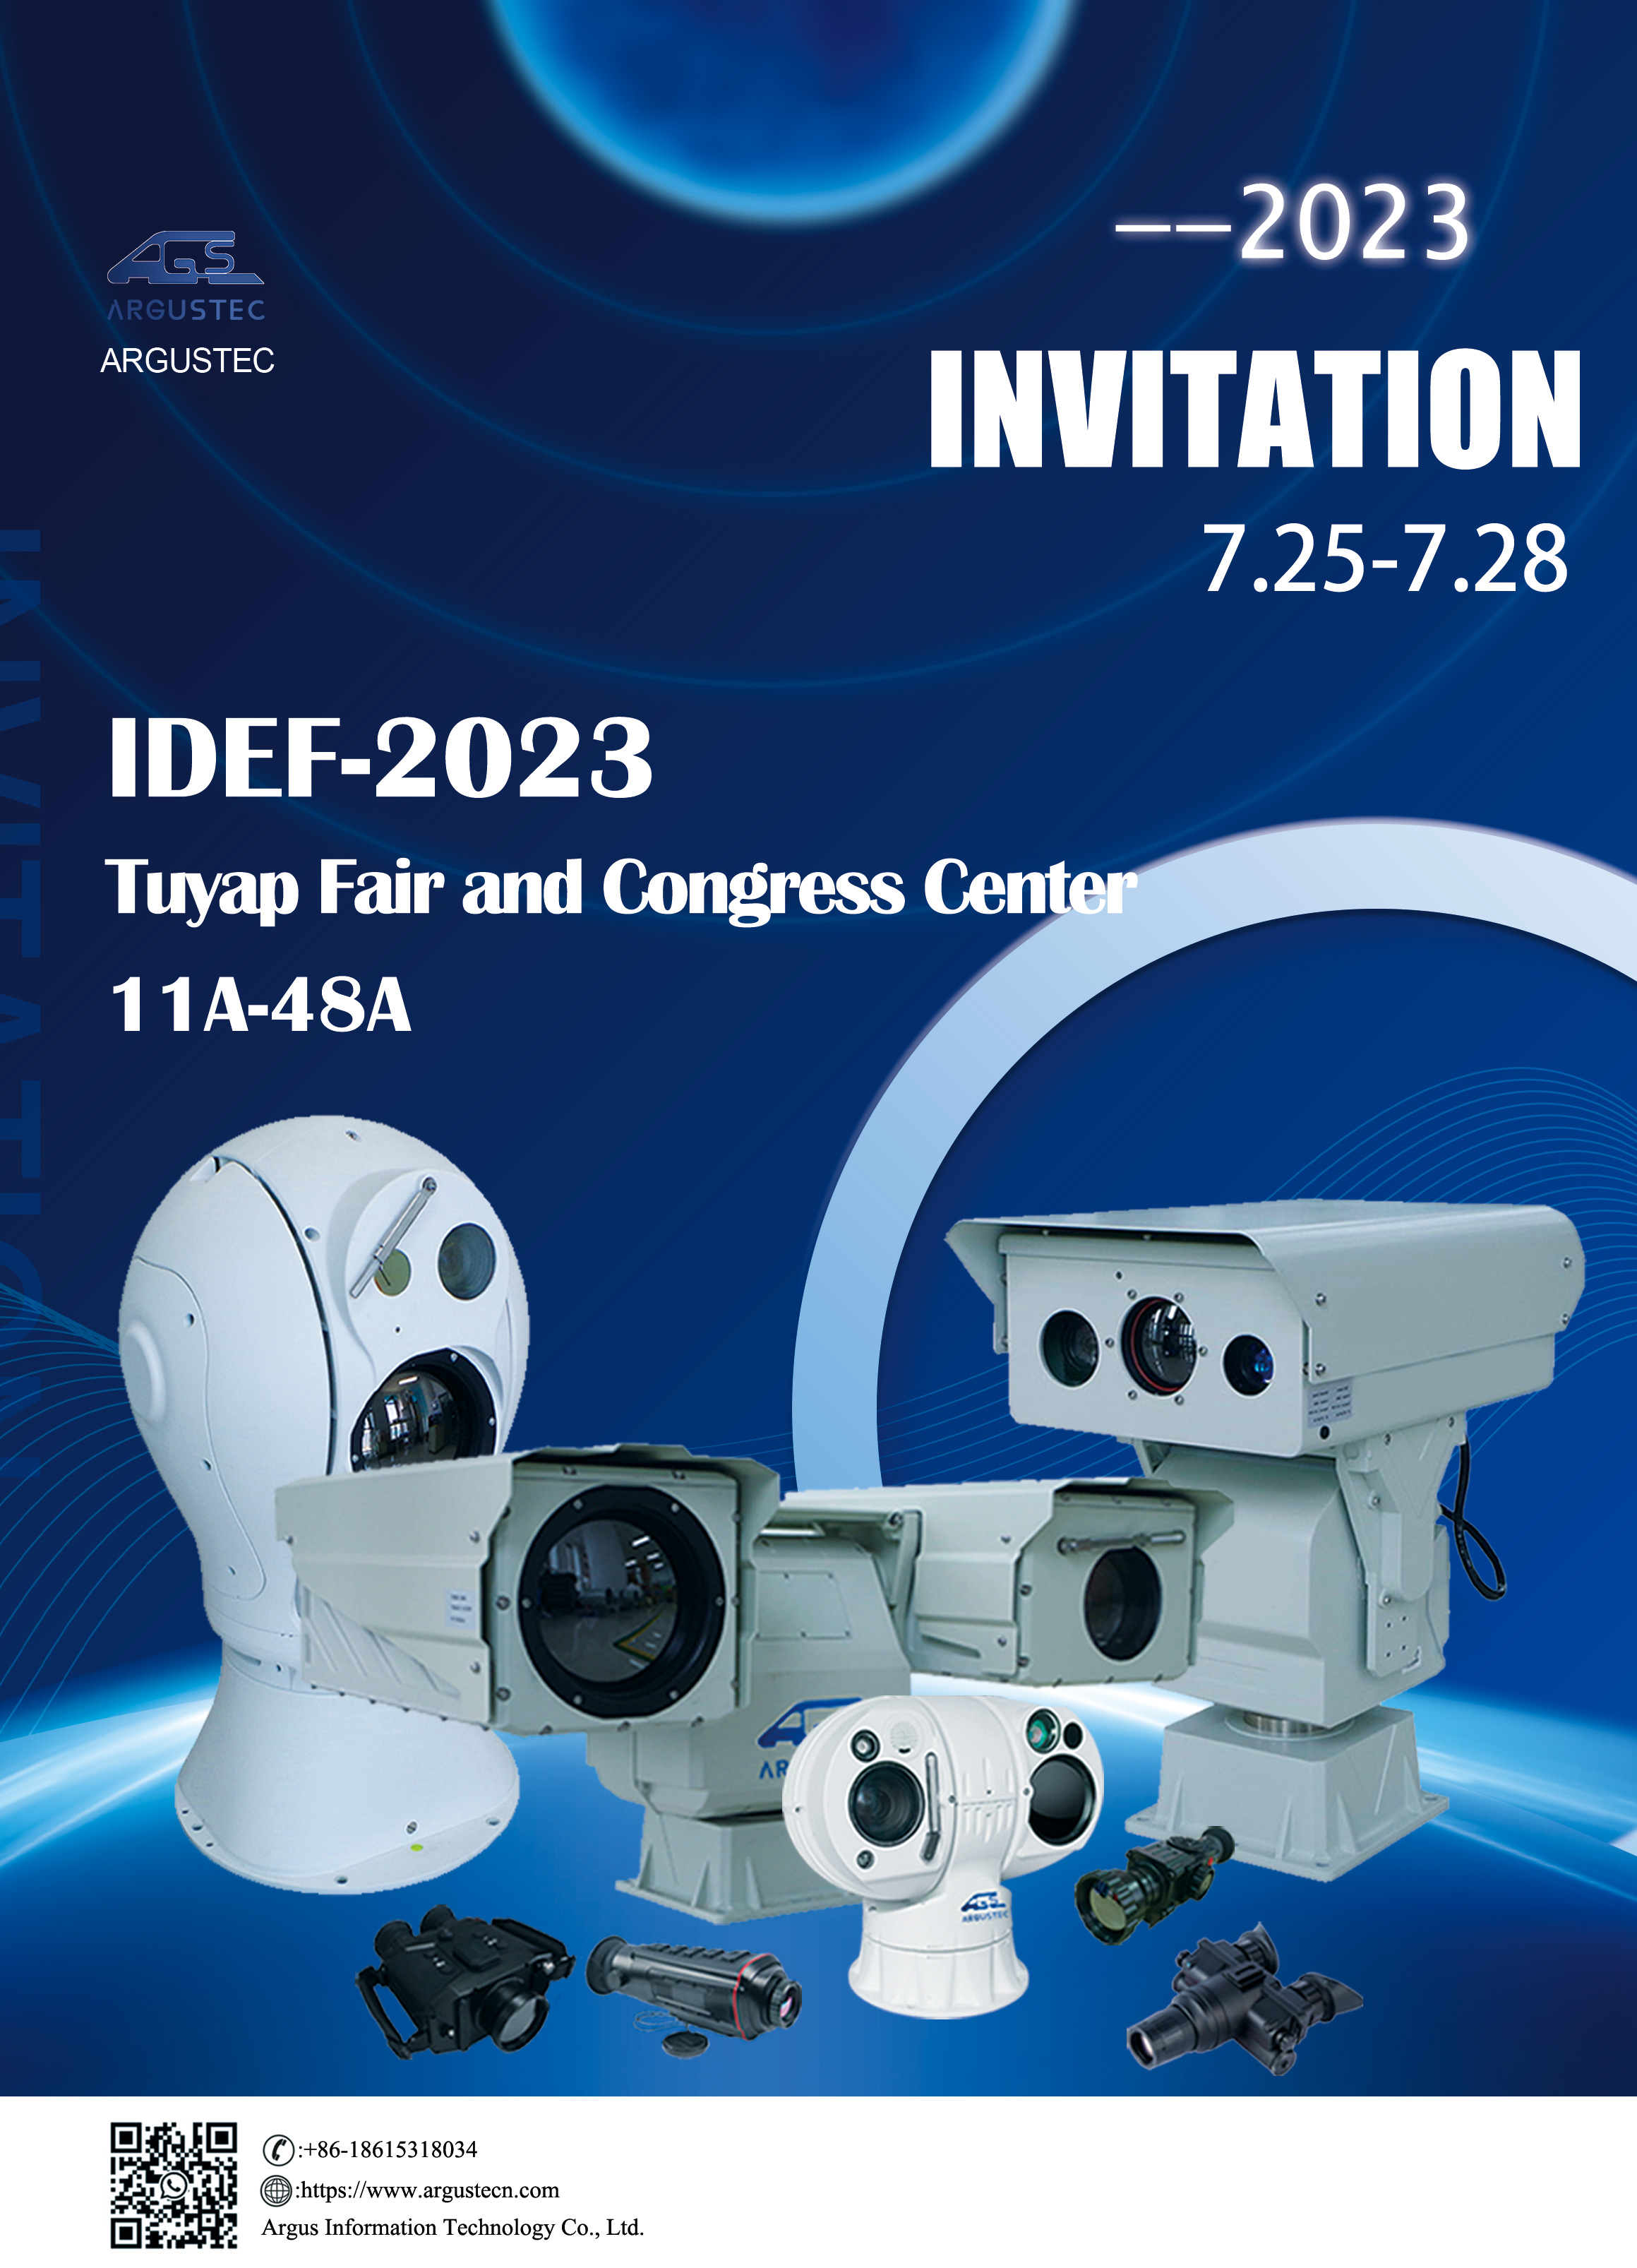 IDEF-2023 Invitation